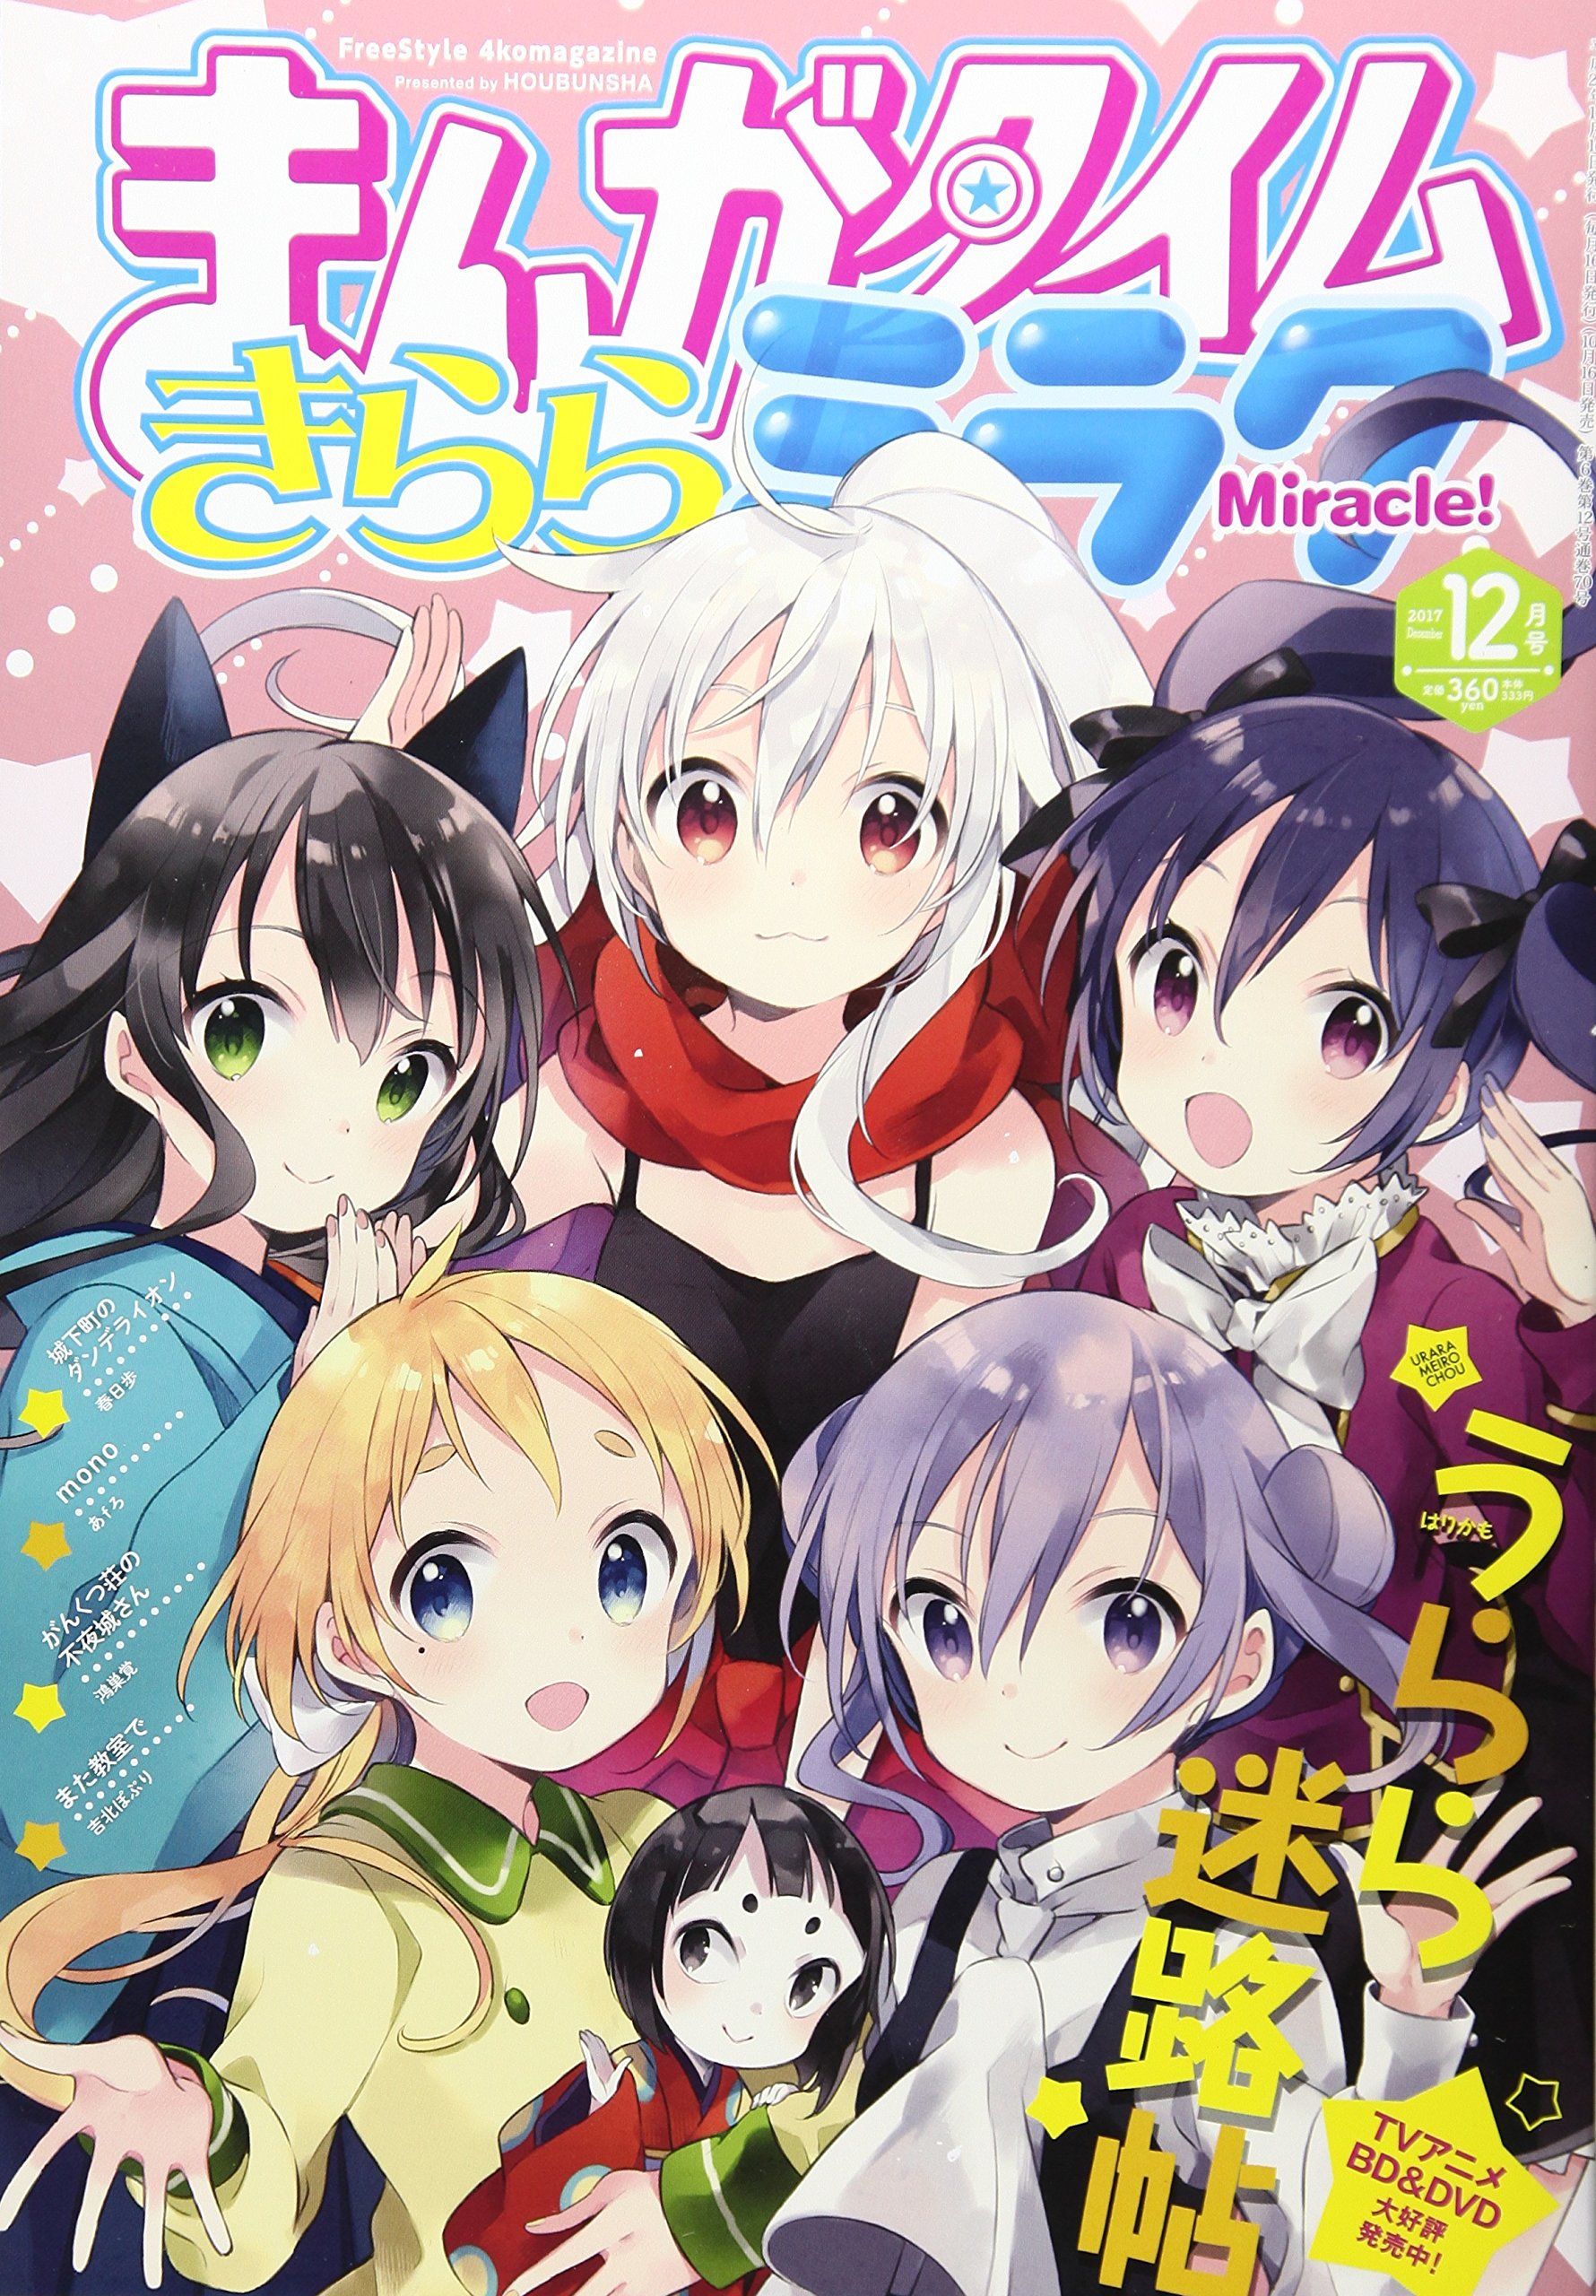 Mangas - Manga Time Kirara Miracle!